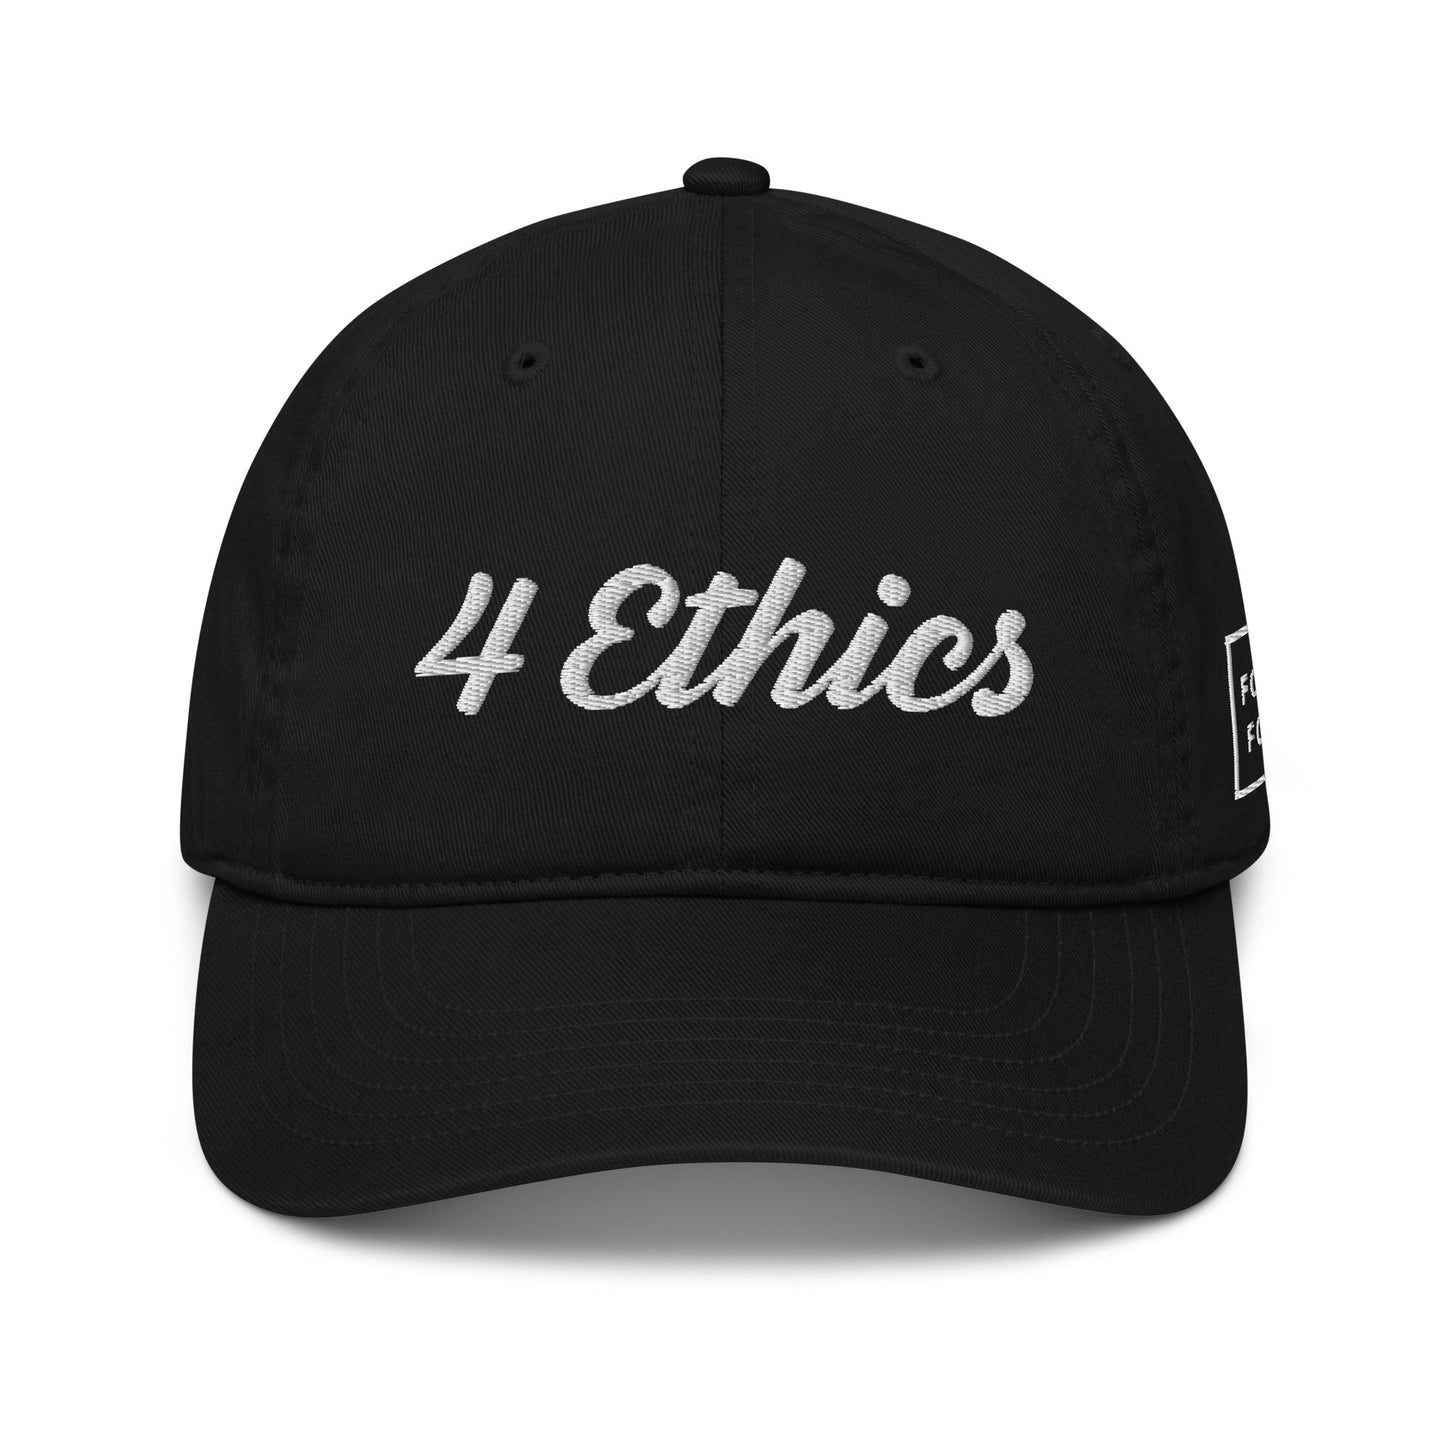 4 Ethics Organic Hat - For Health For Ethics - Black